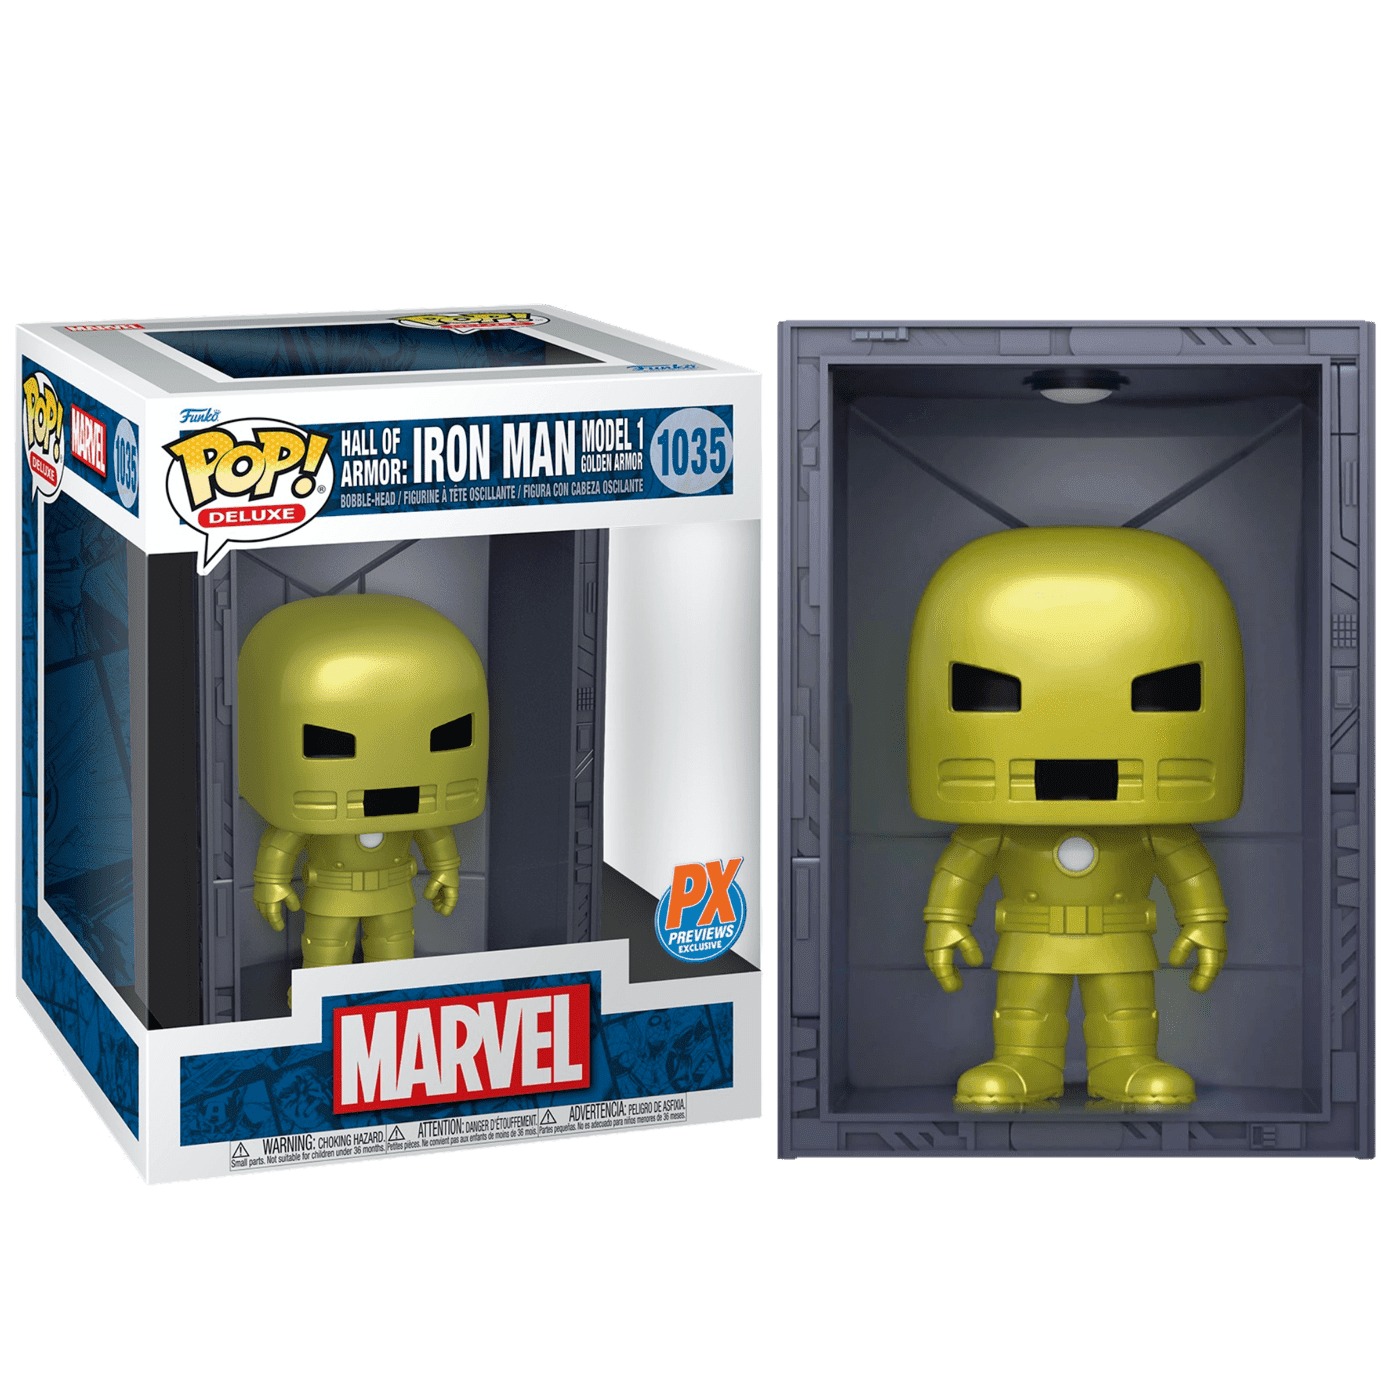 Фигурка Funko Pop! Marvel: Iron Man Hall of Armor Model 1 Deluxe Vinyl Figure бокс железный человек iron man 3